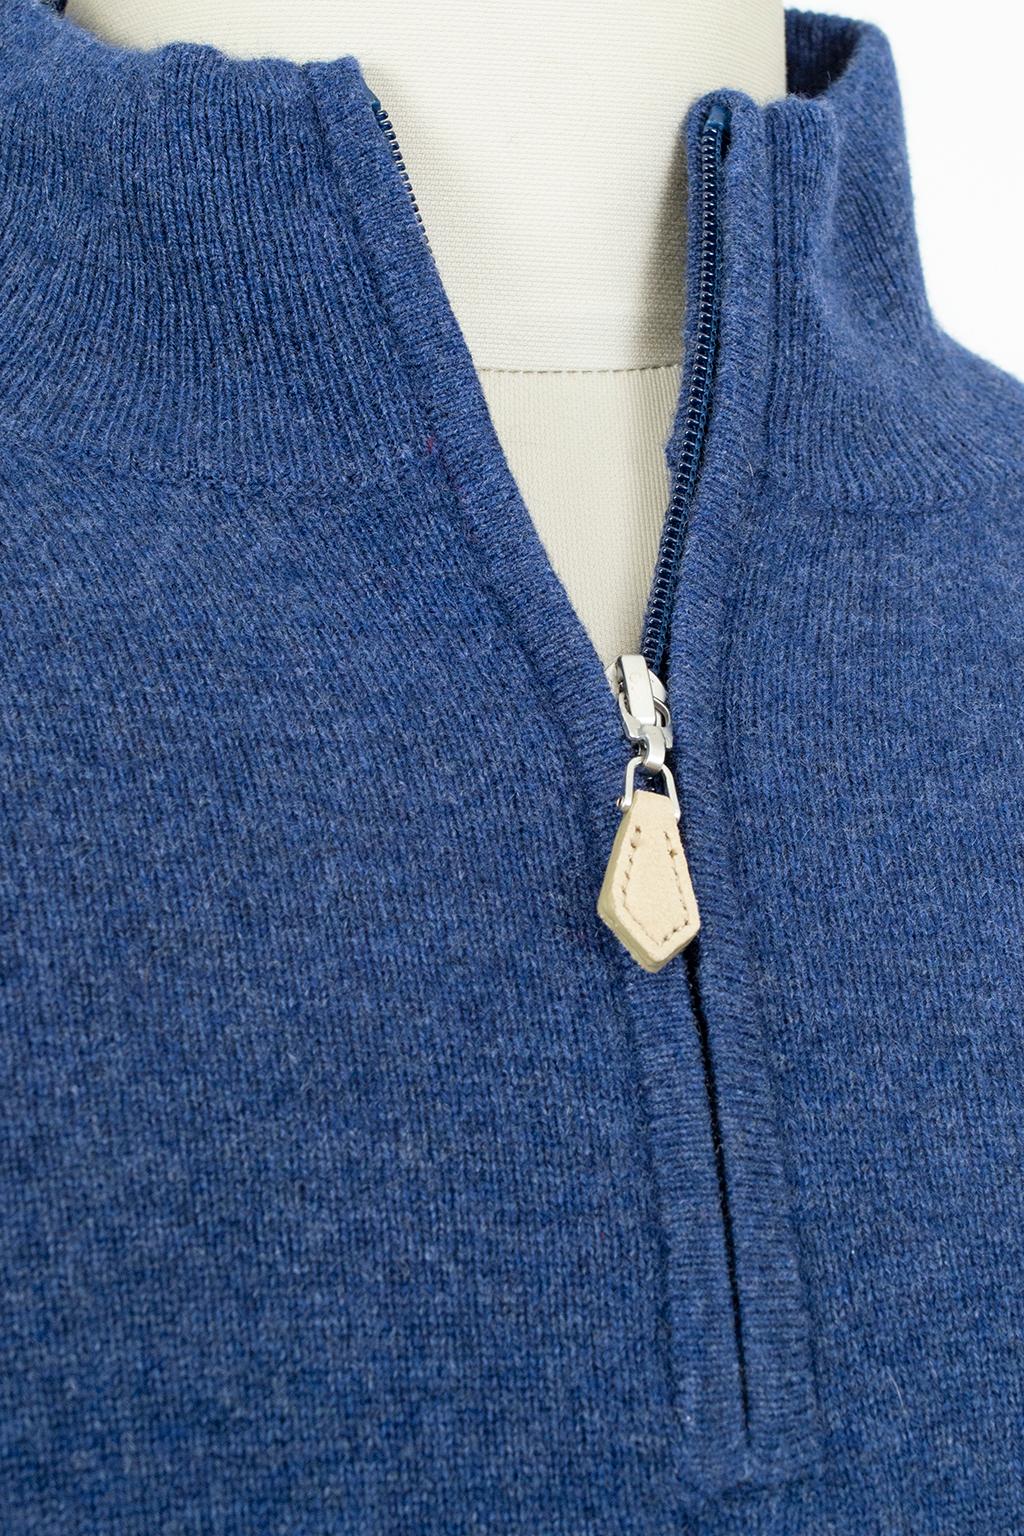 New *Large Size* Men’s Neiman Marcus Blue Cashmere Half-Zip Sweater – XXL, 2019 For Sale 1